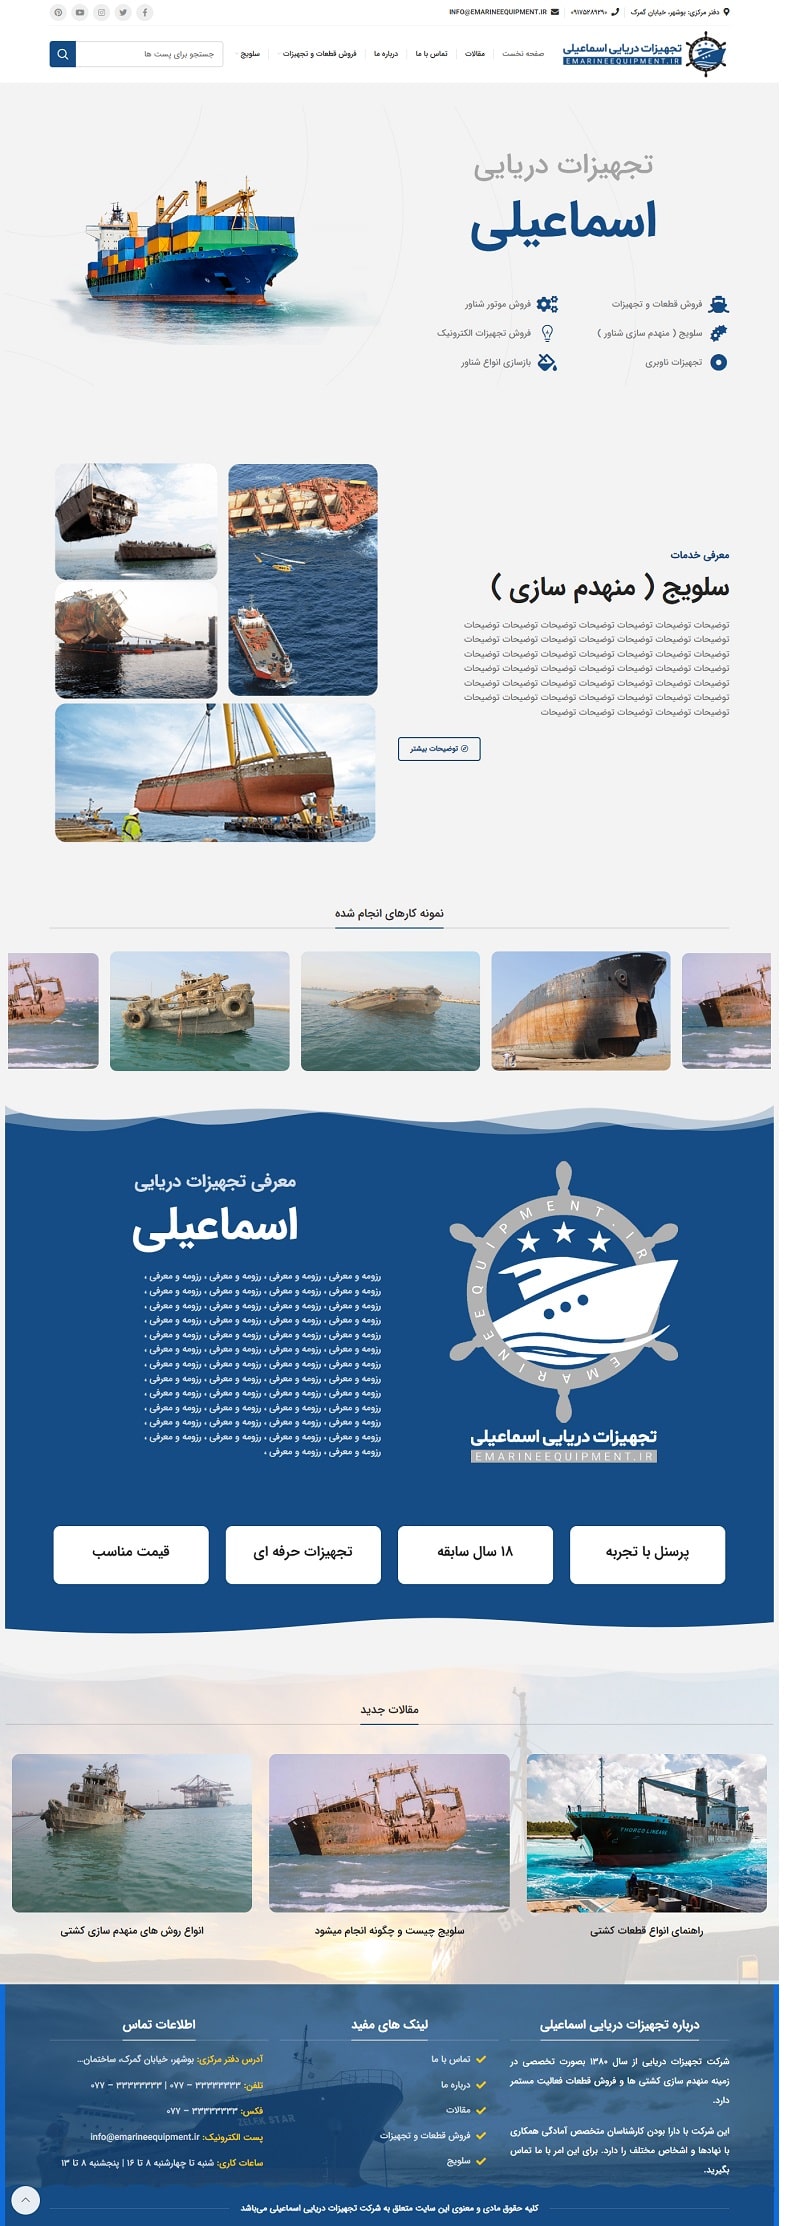 نمونه کار طراحی سایت کشتیرانی اسماعیلی